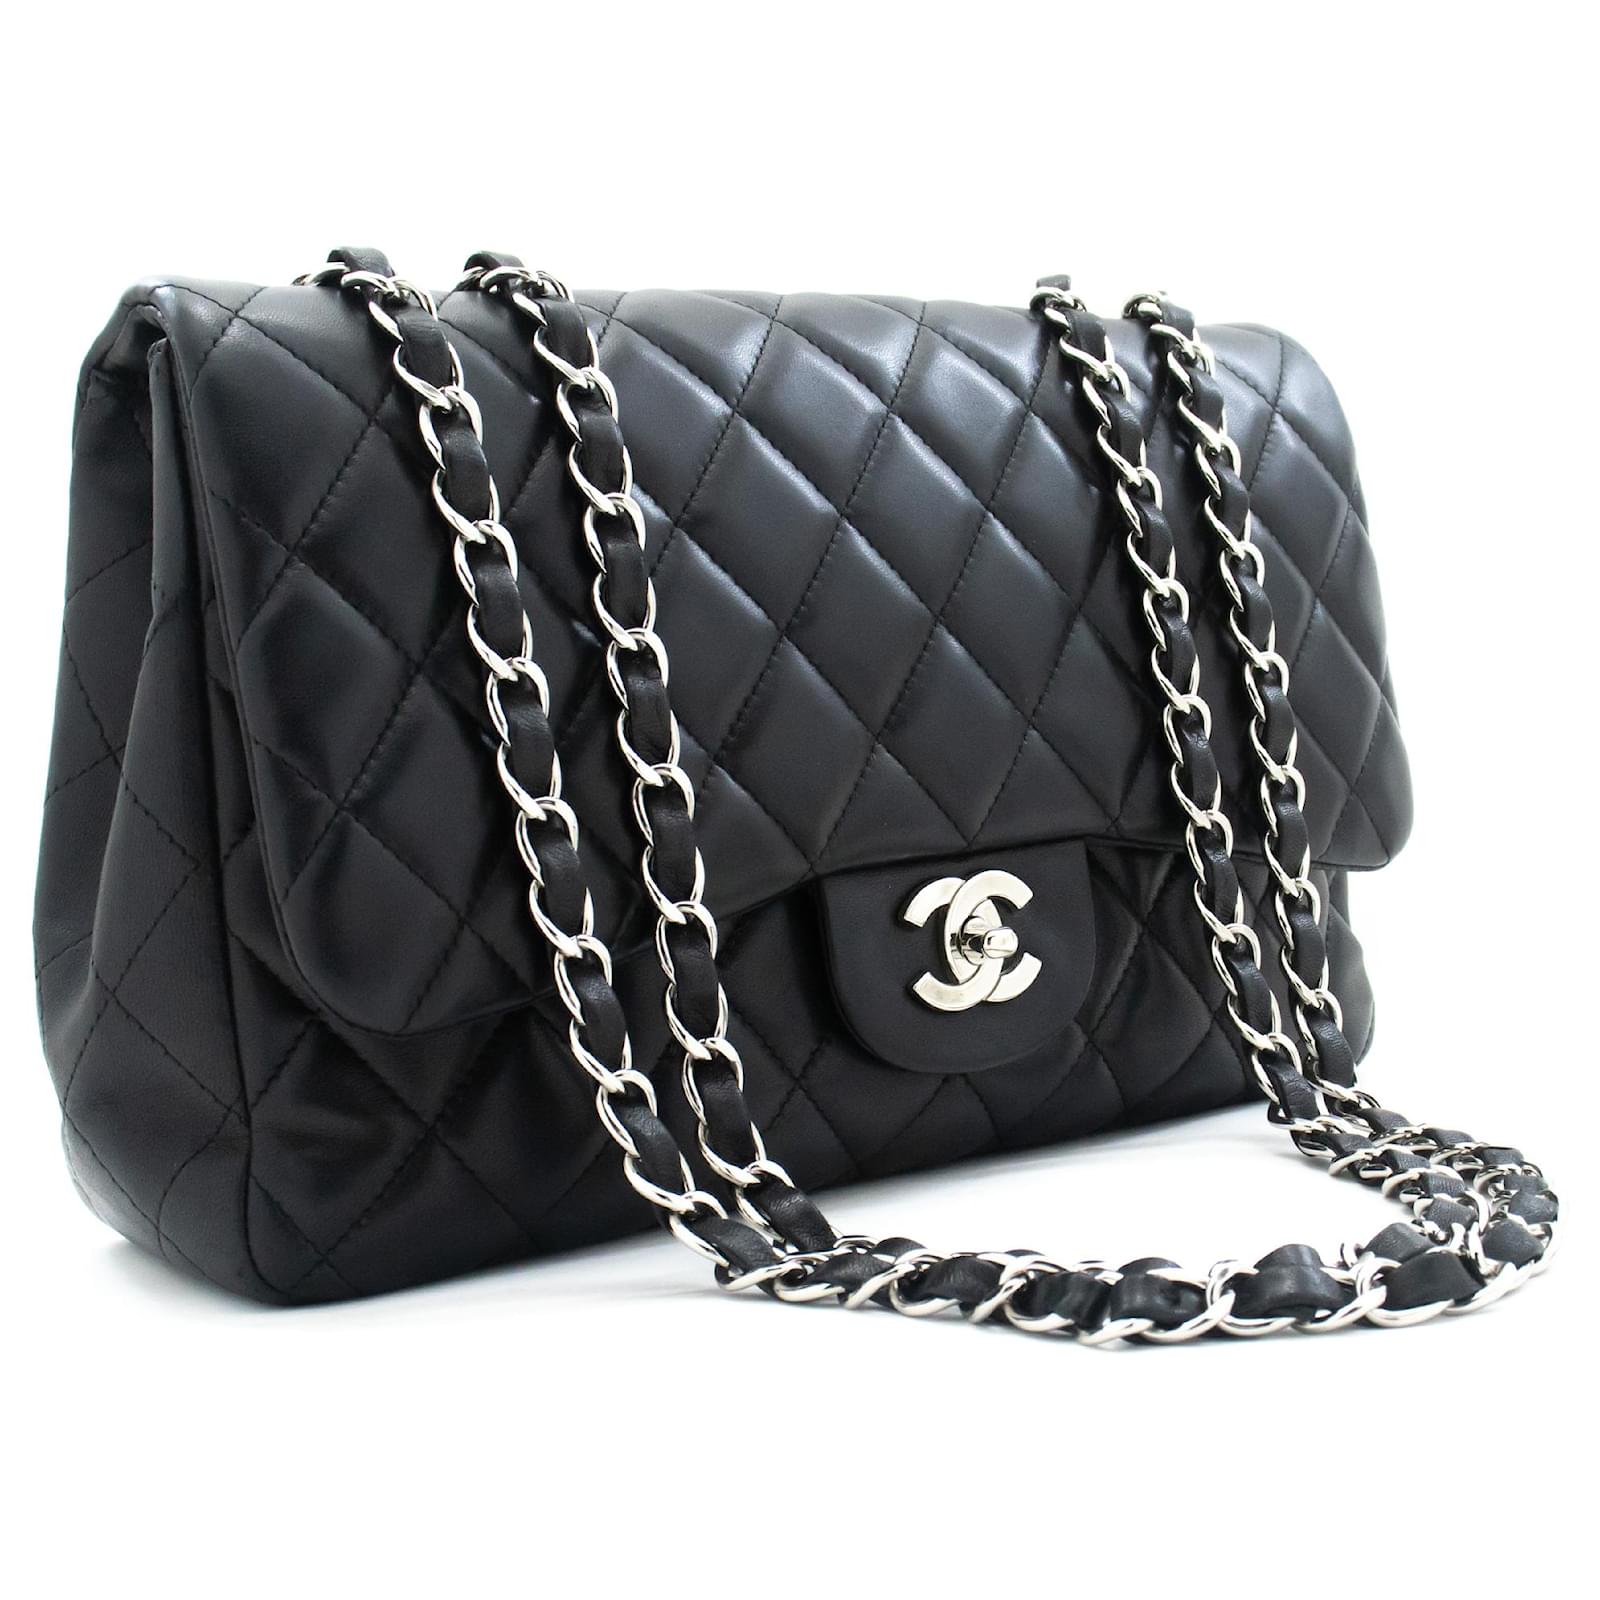 black and white chanel handbag new